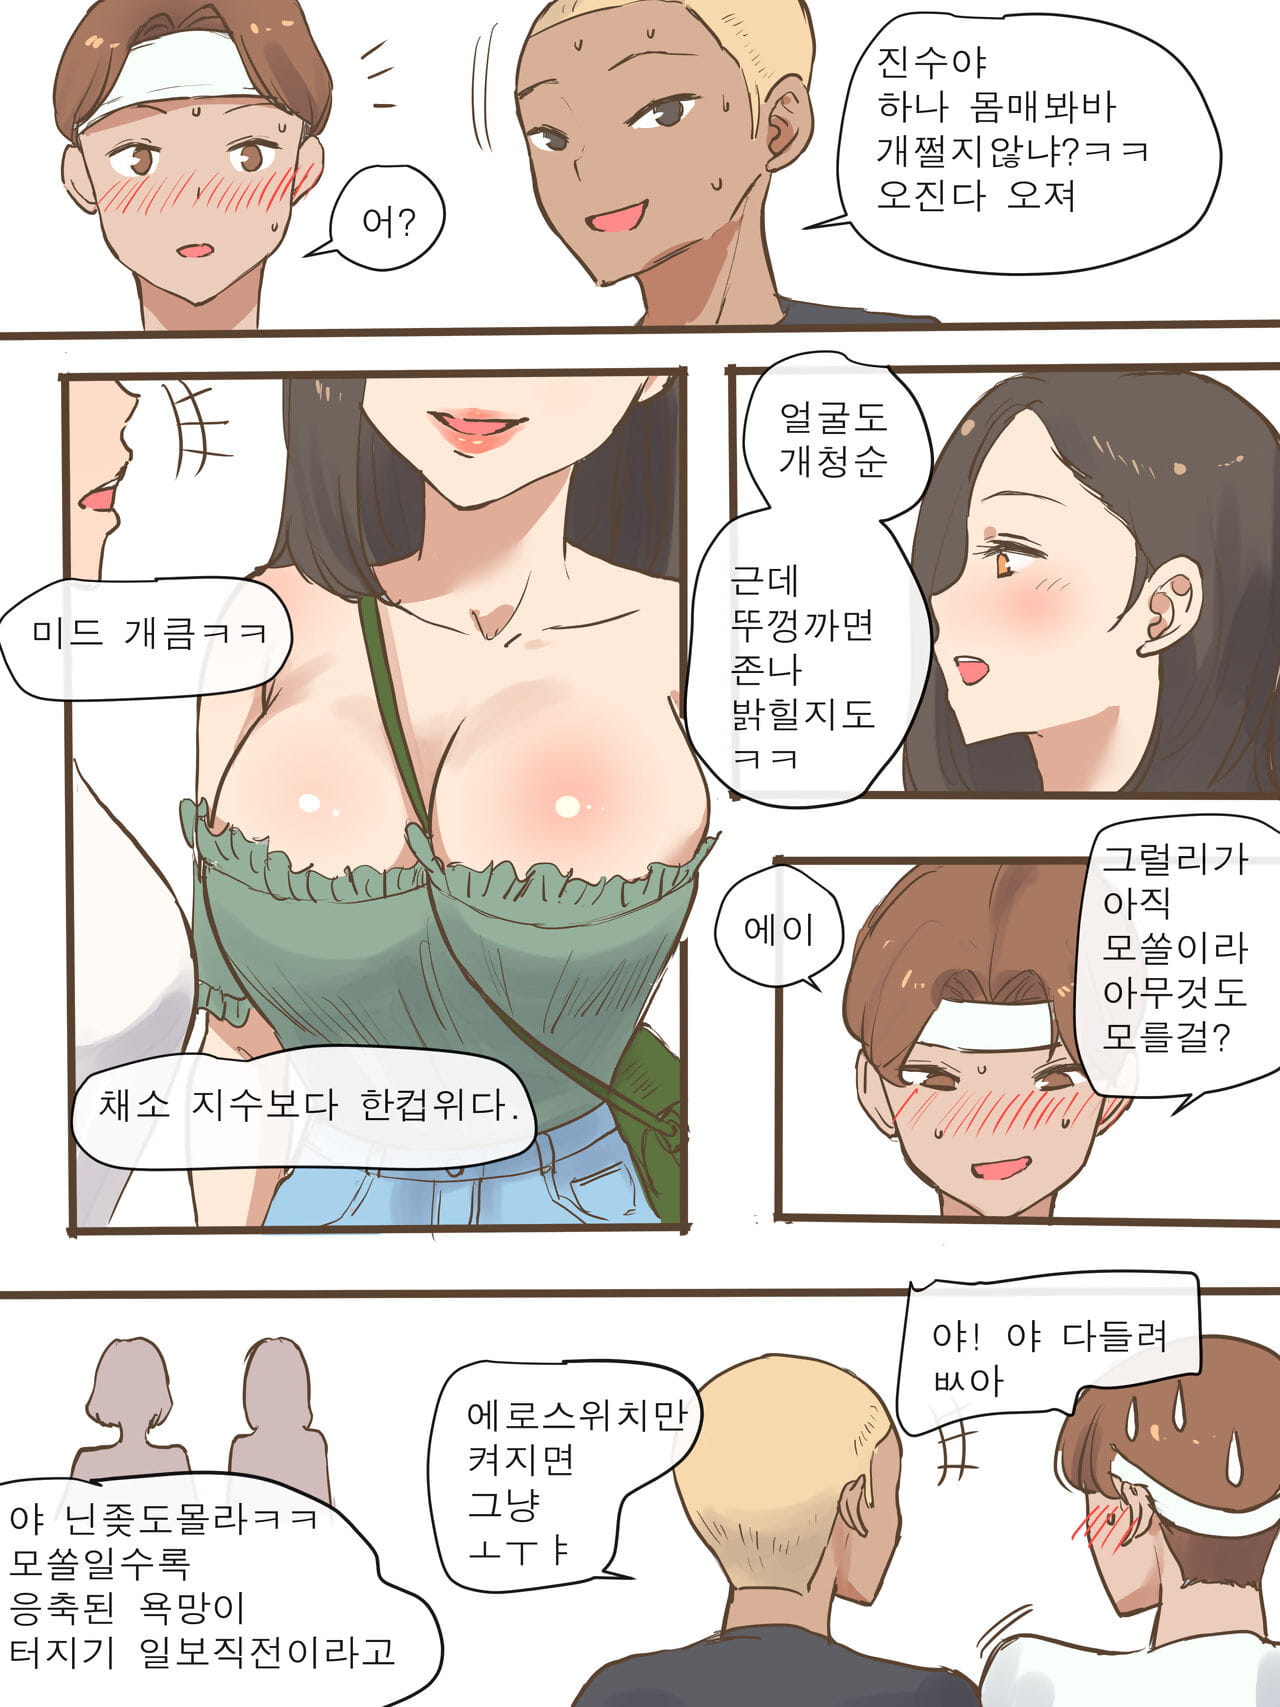 laliberte Smart Erhalten zu D Erhalten zu Koreanisch decensored